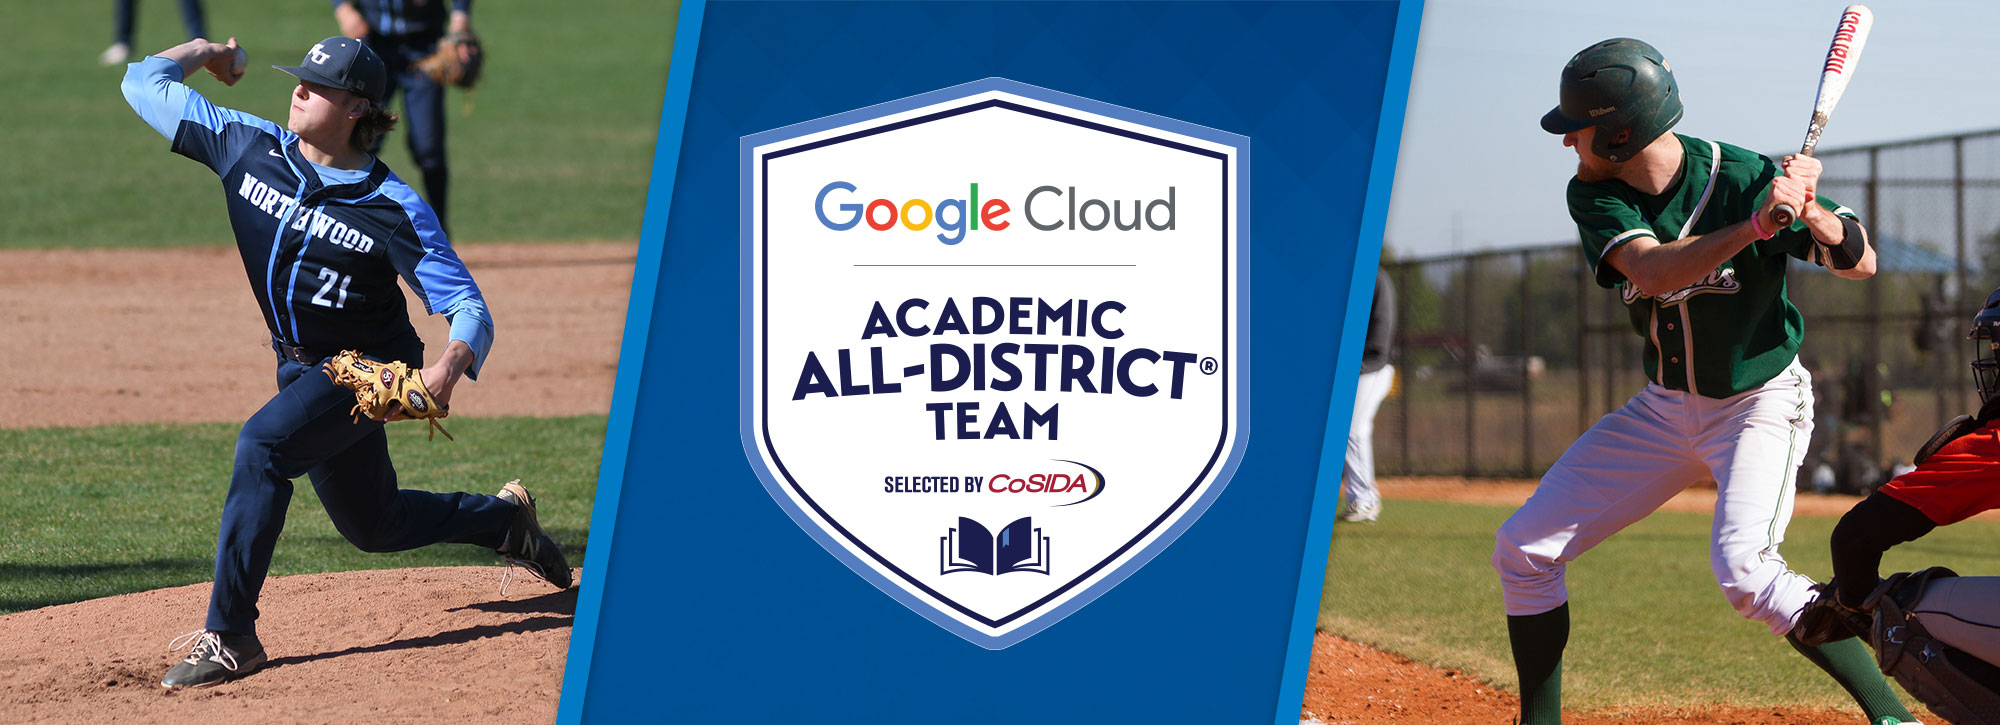 Northwood's Dimitrie, Tiffin's Callihan Named Google Cloud Academic All-District Baseball Honorees